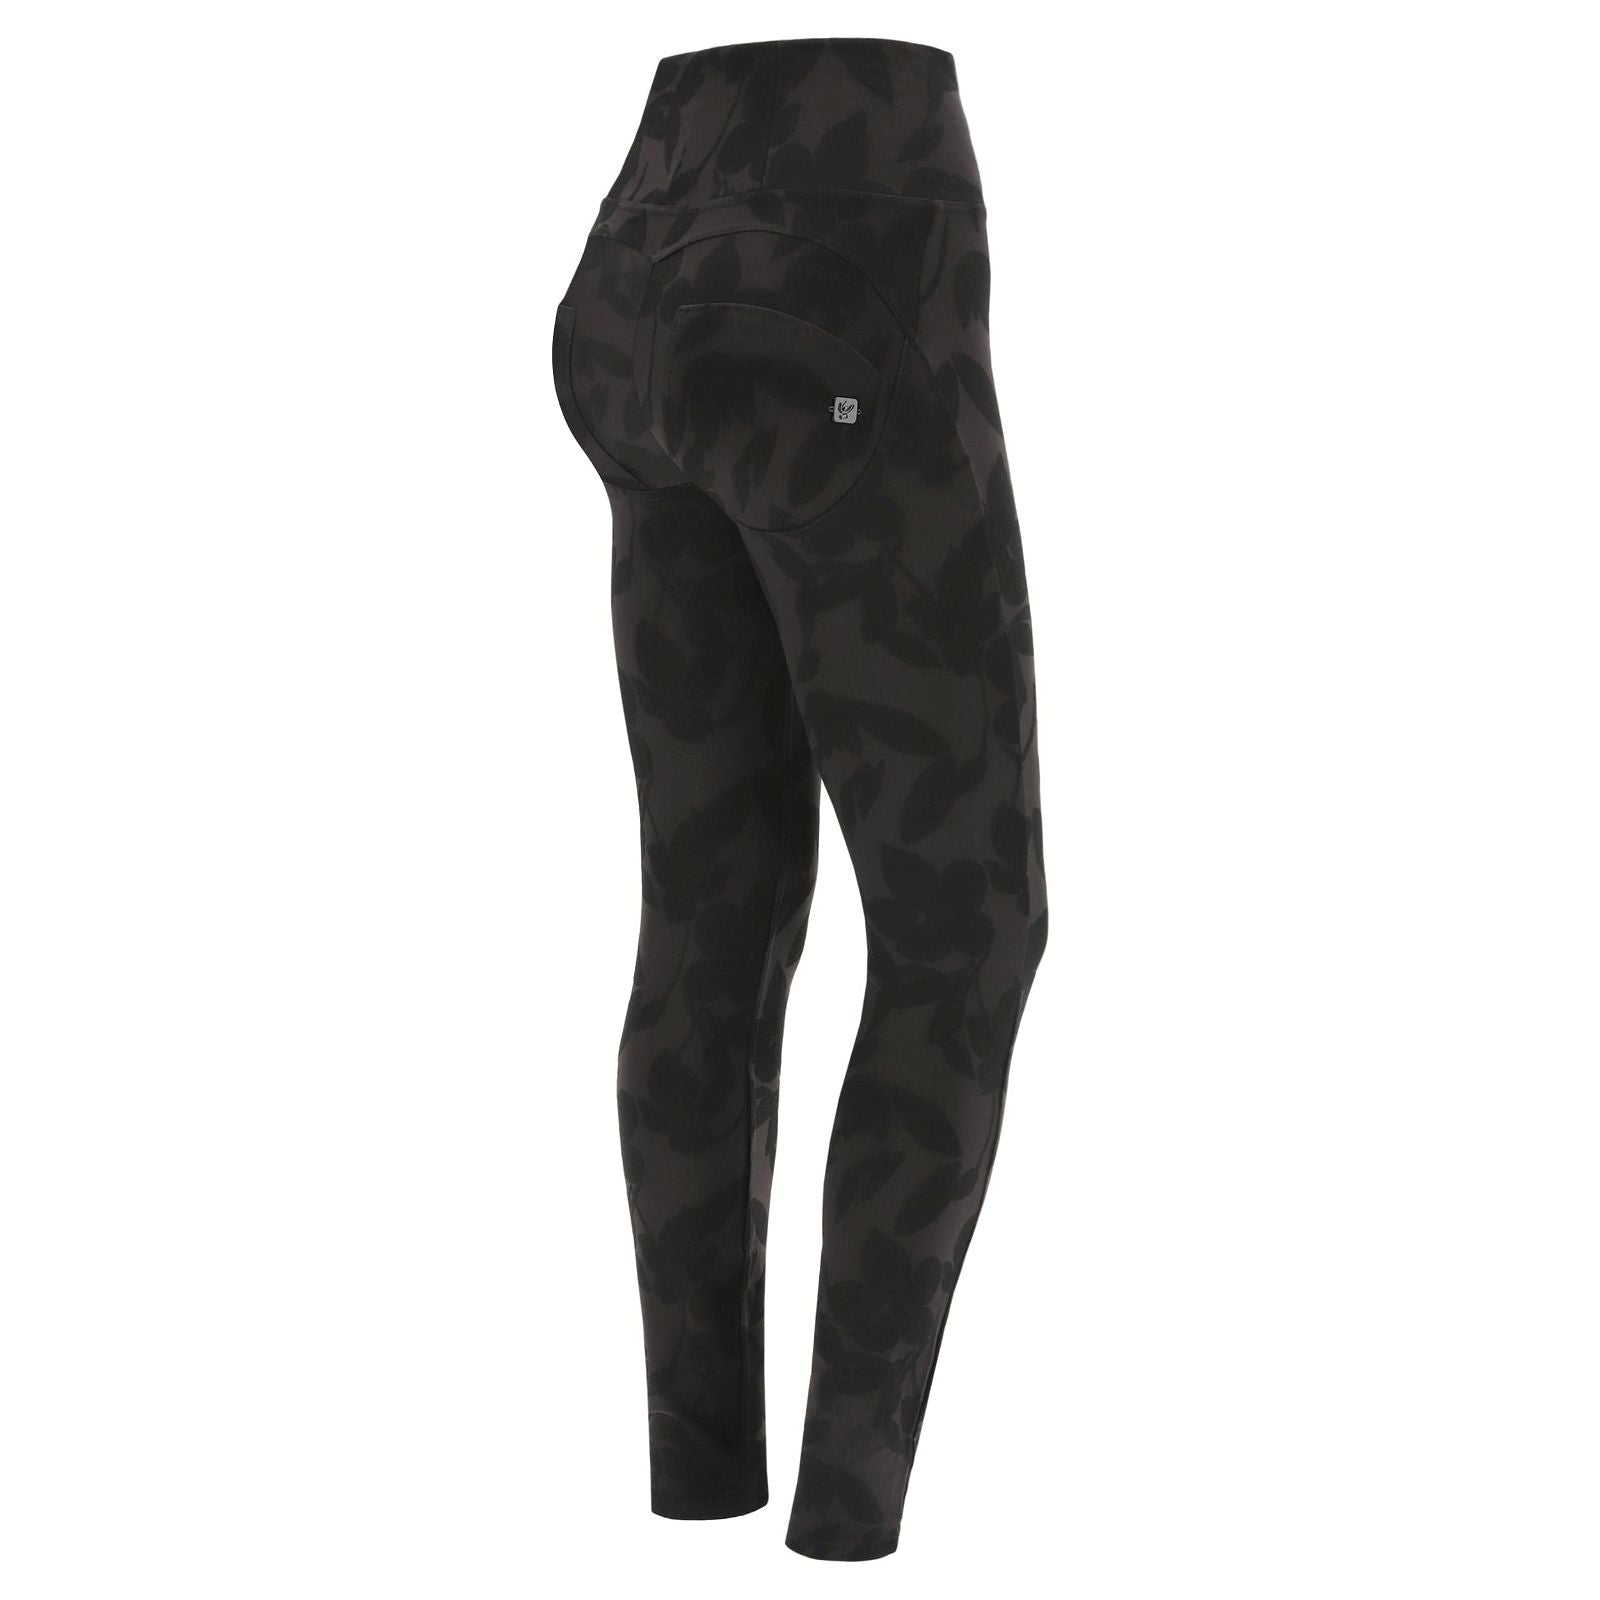 WR.UP® Trousers - High waist - Full Length - Black Jacquard 1